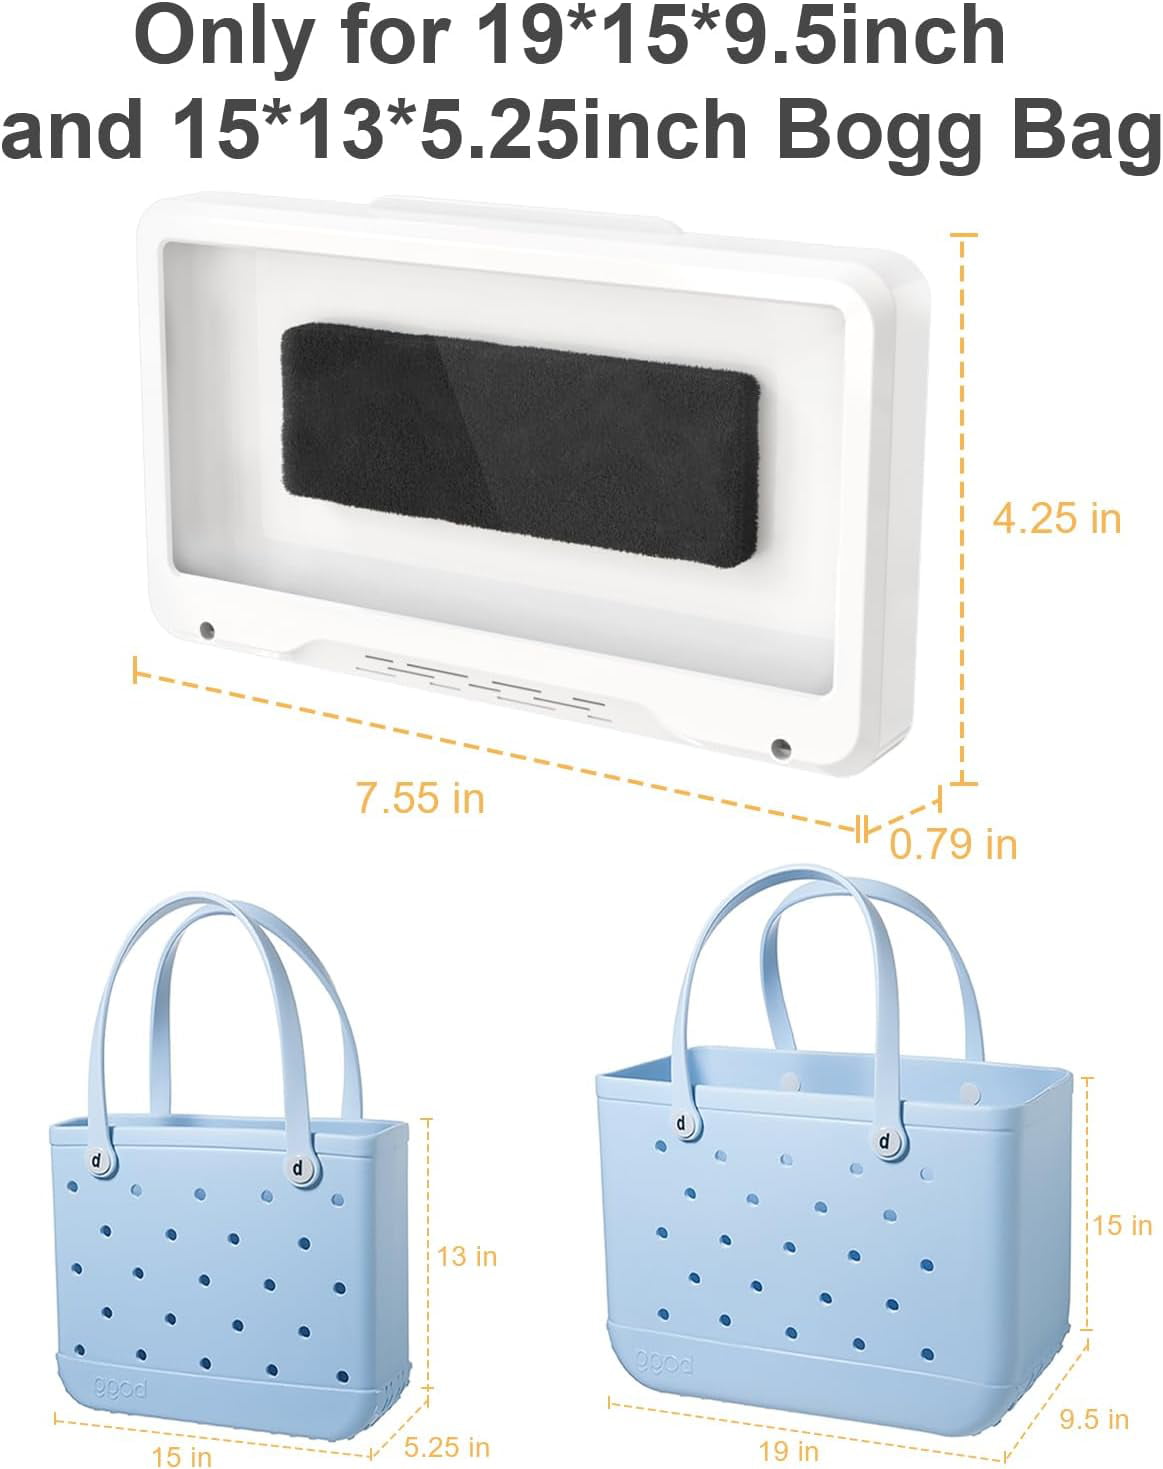 Monogram Phone Holder Bag Charm Water Resistant Bogg Bag 